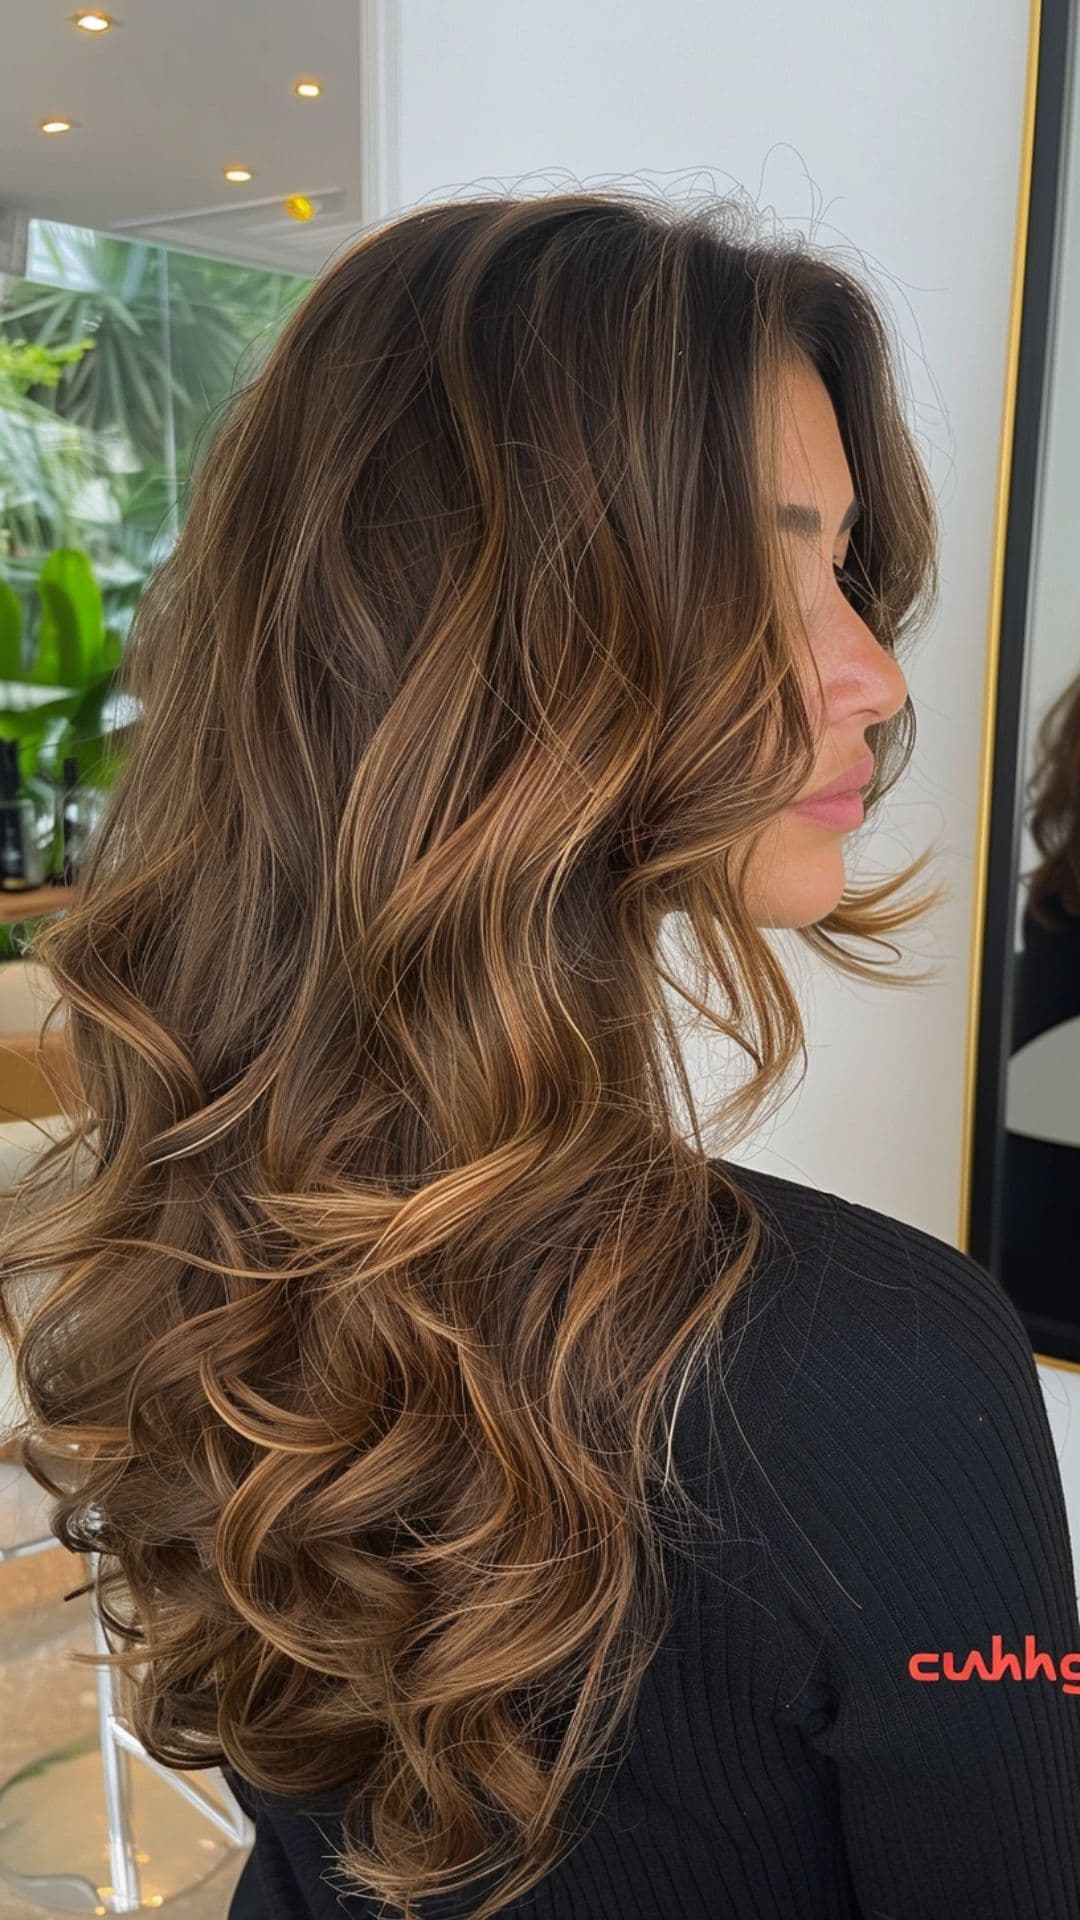 A woman modelling a caramel brown highlights hair.